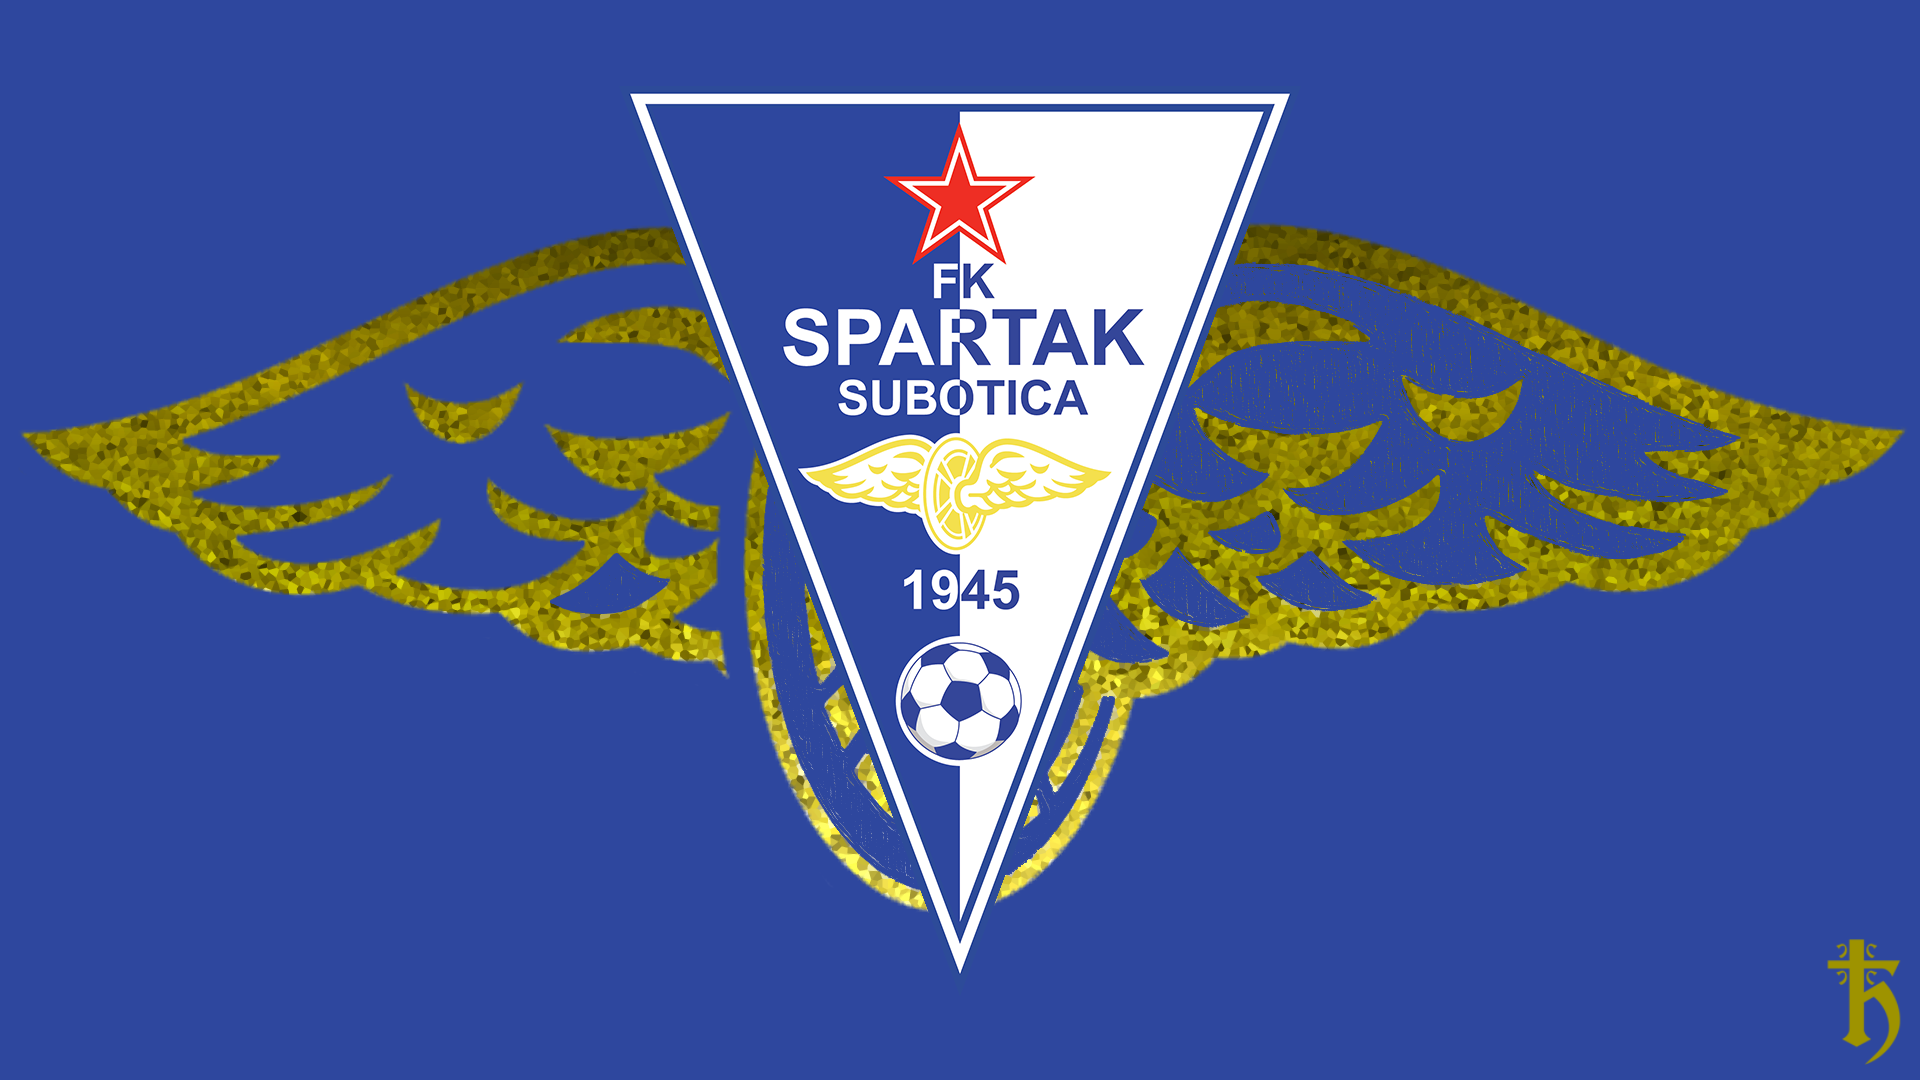 General 1920x1080 soccer Serbia 1945 (year) logo blue background